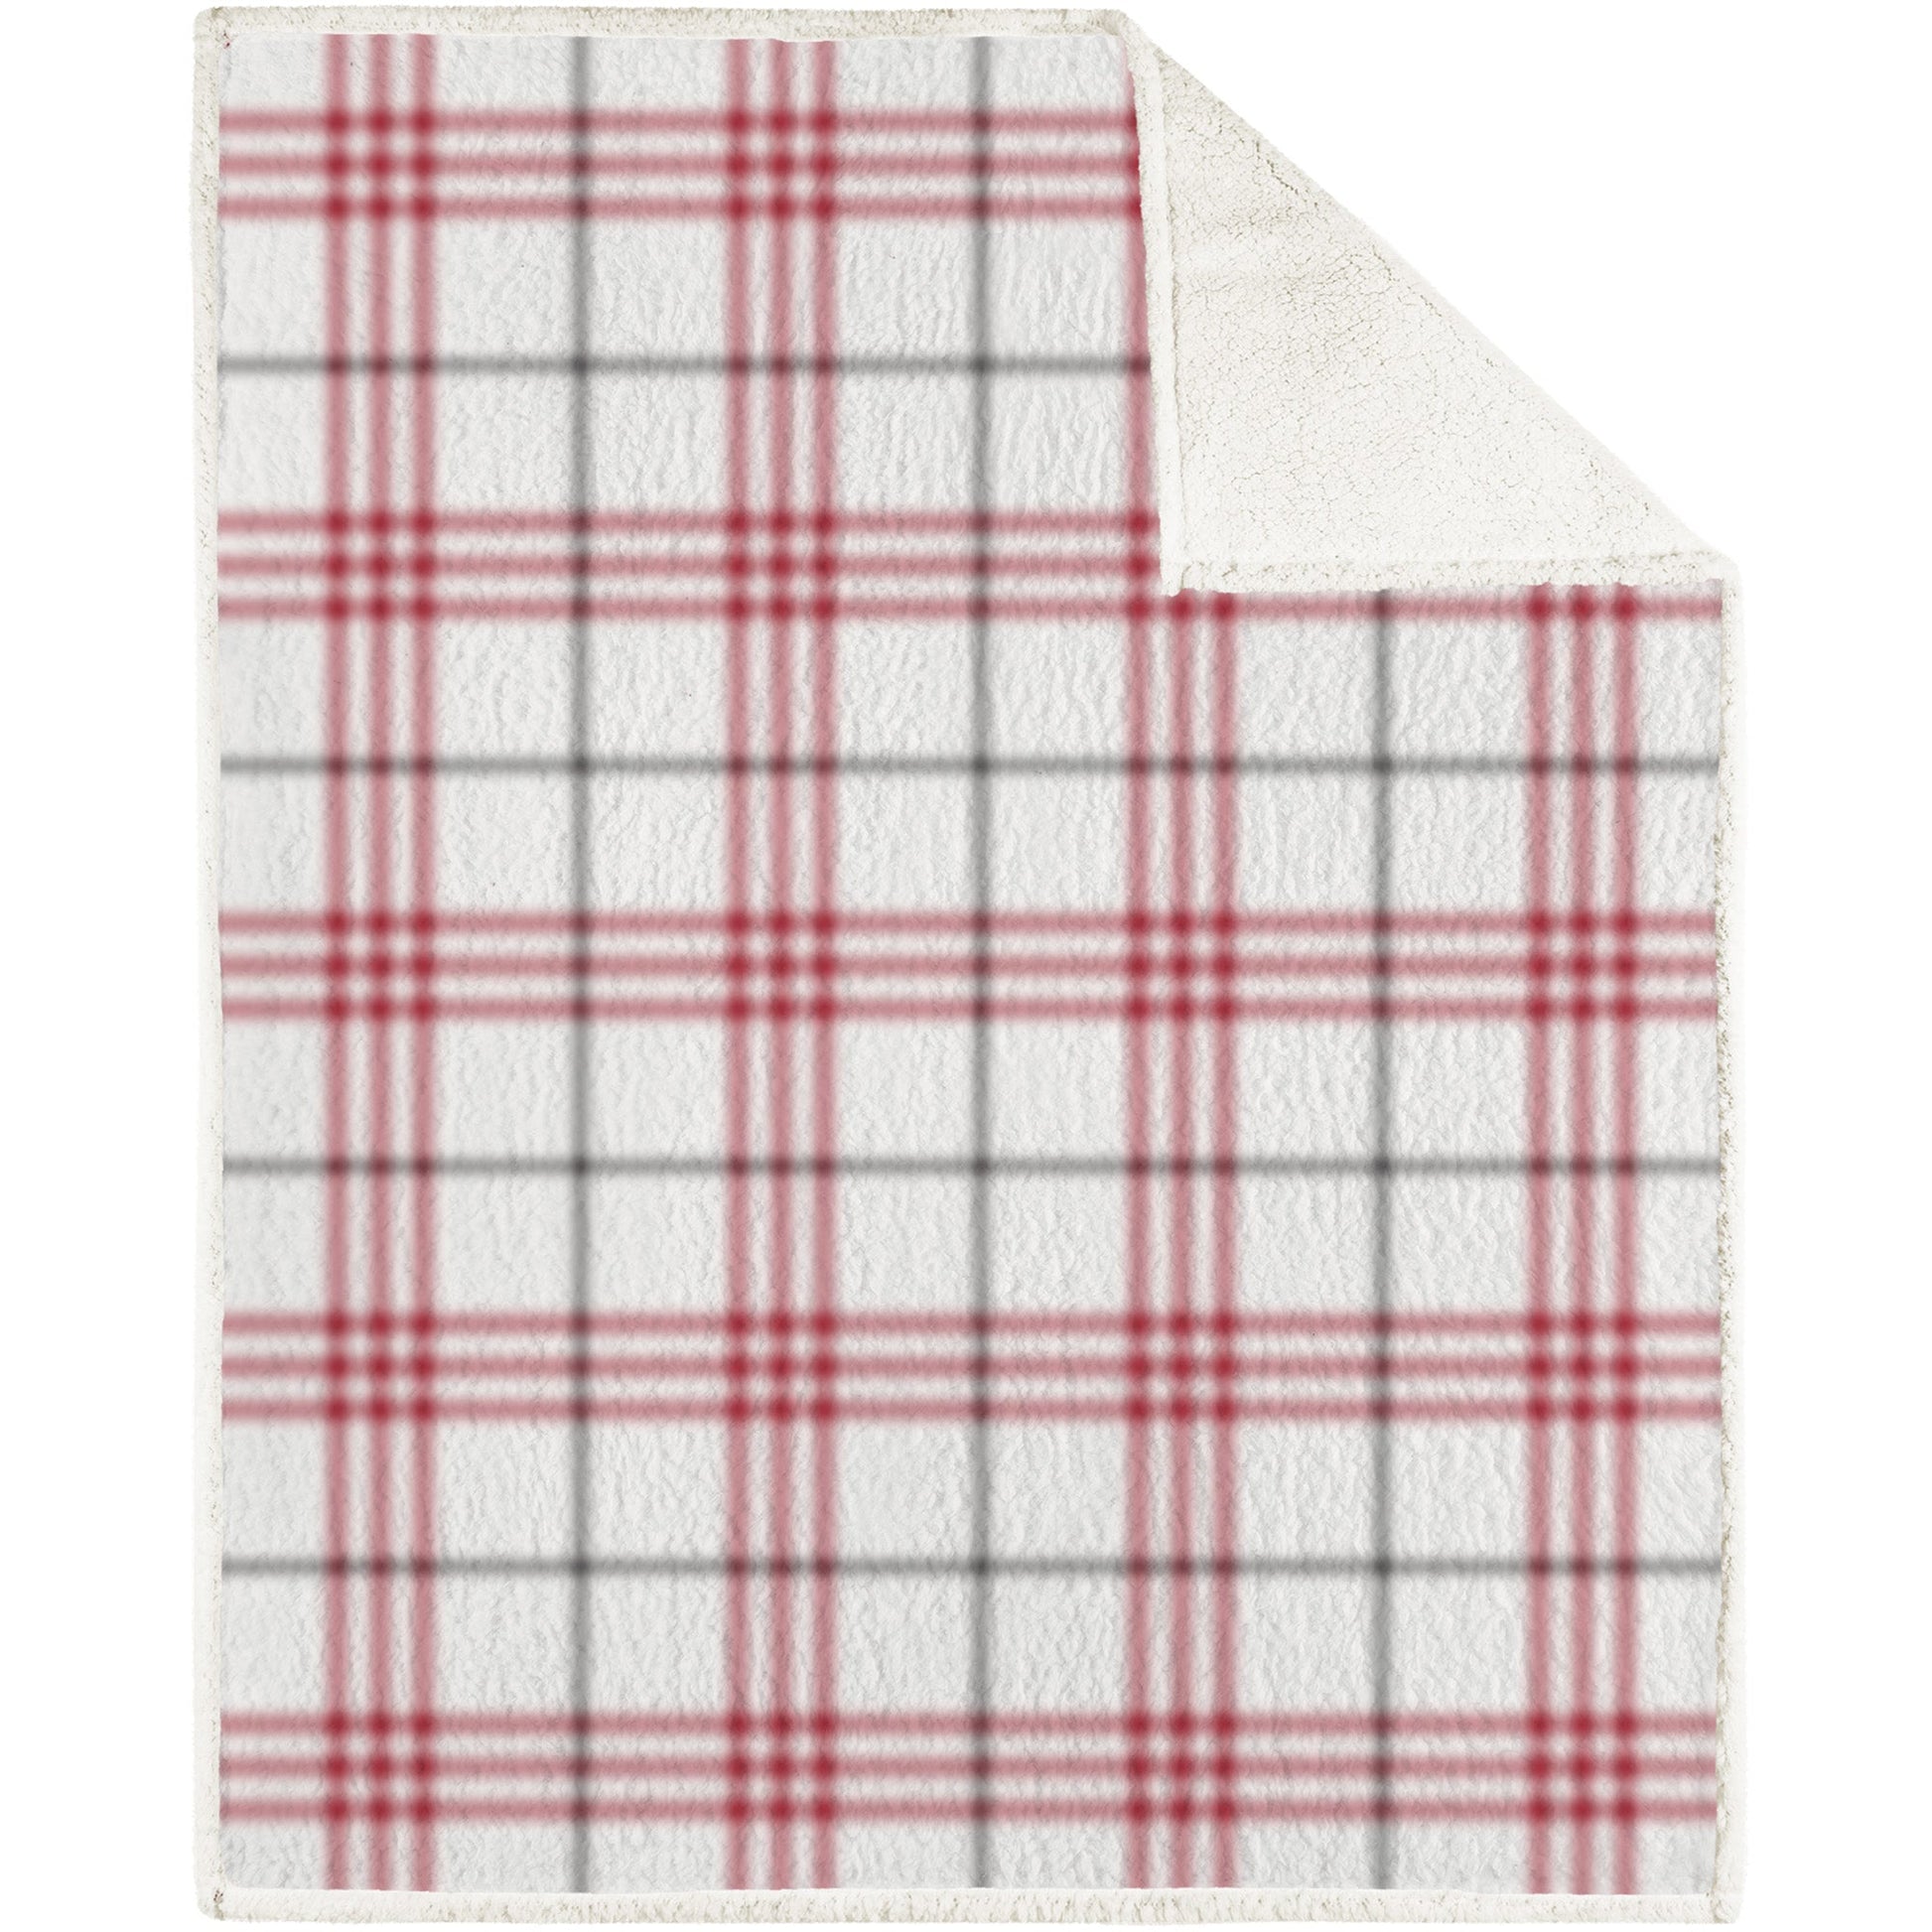 Super Soft Printed Reversible Blanket Throw Sherpa Home Decor Bedding 48X60 Red Plaid - DecoElegance - Blanket Throw Home Bedding